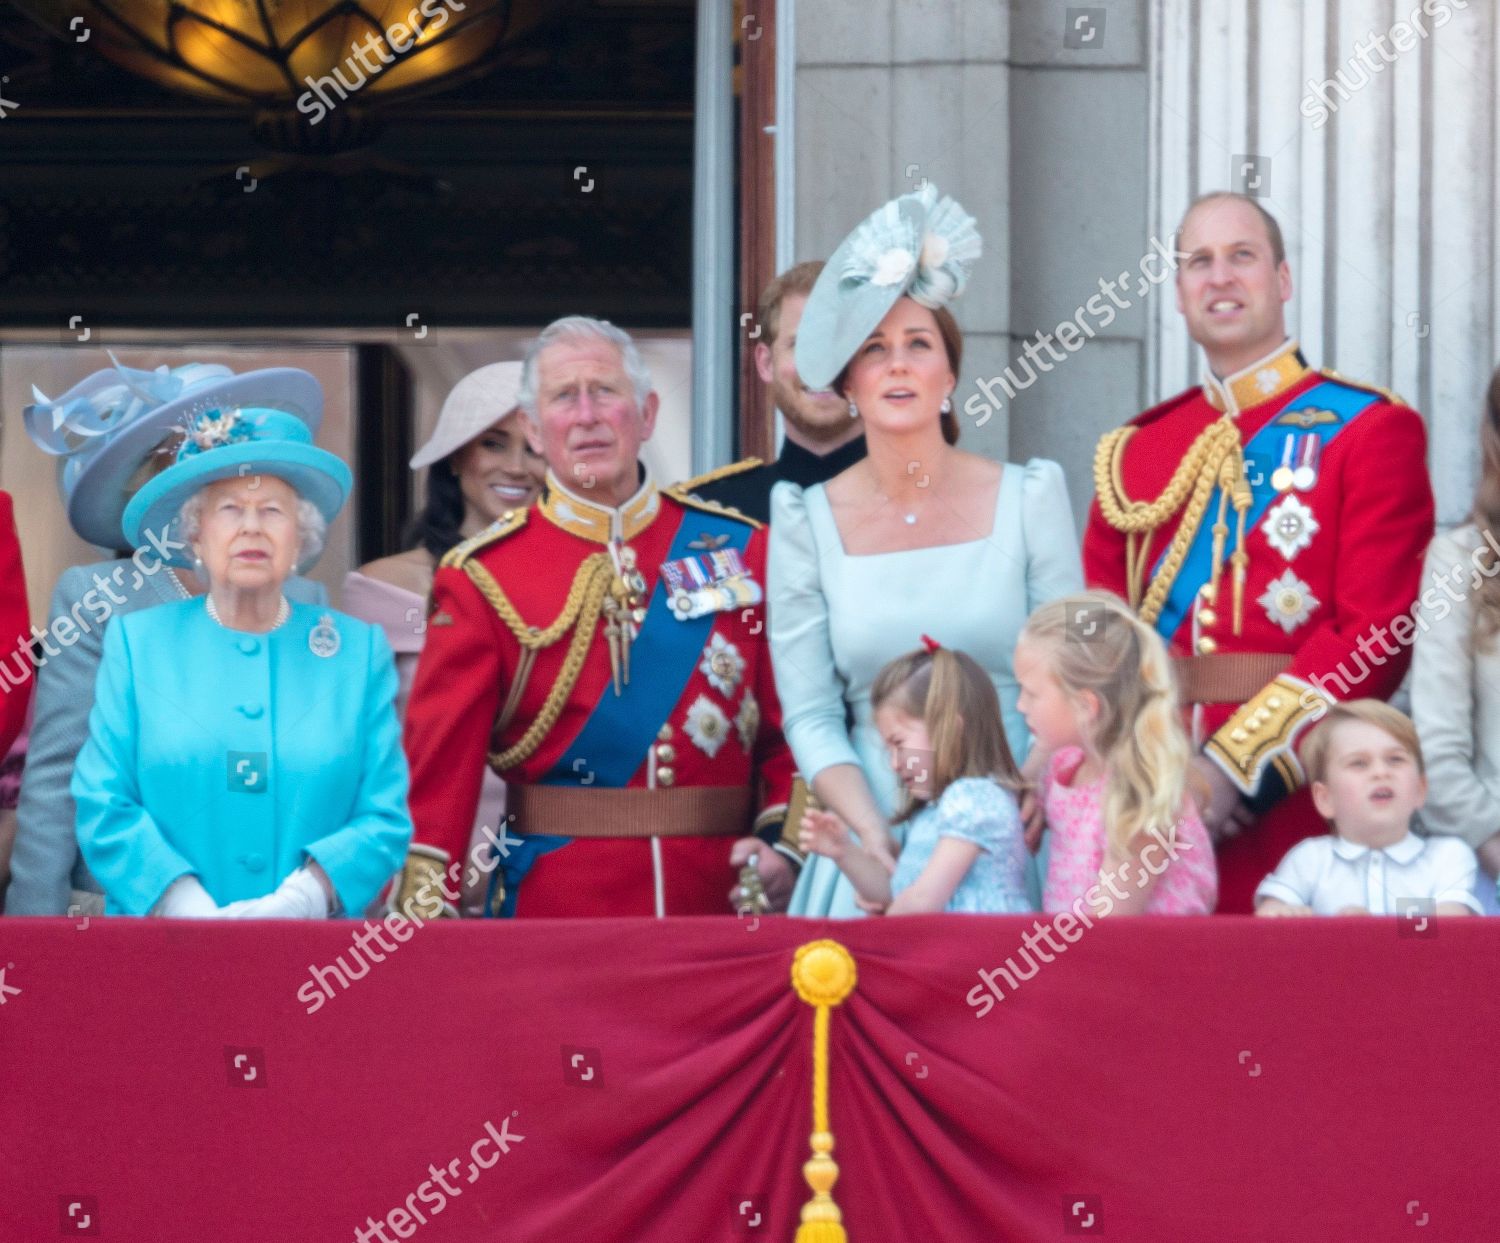 trooping-the-colour-ceremony-london-uk-9708406bn-1500.jpg